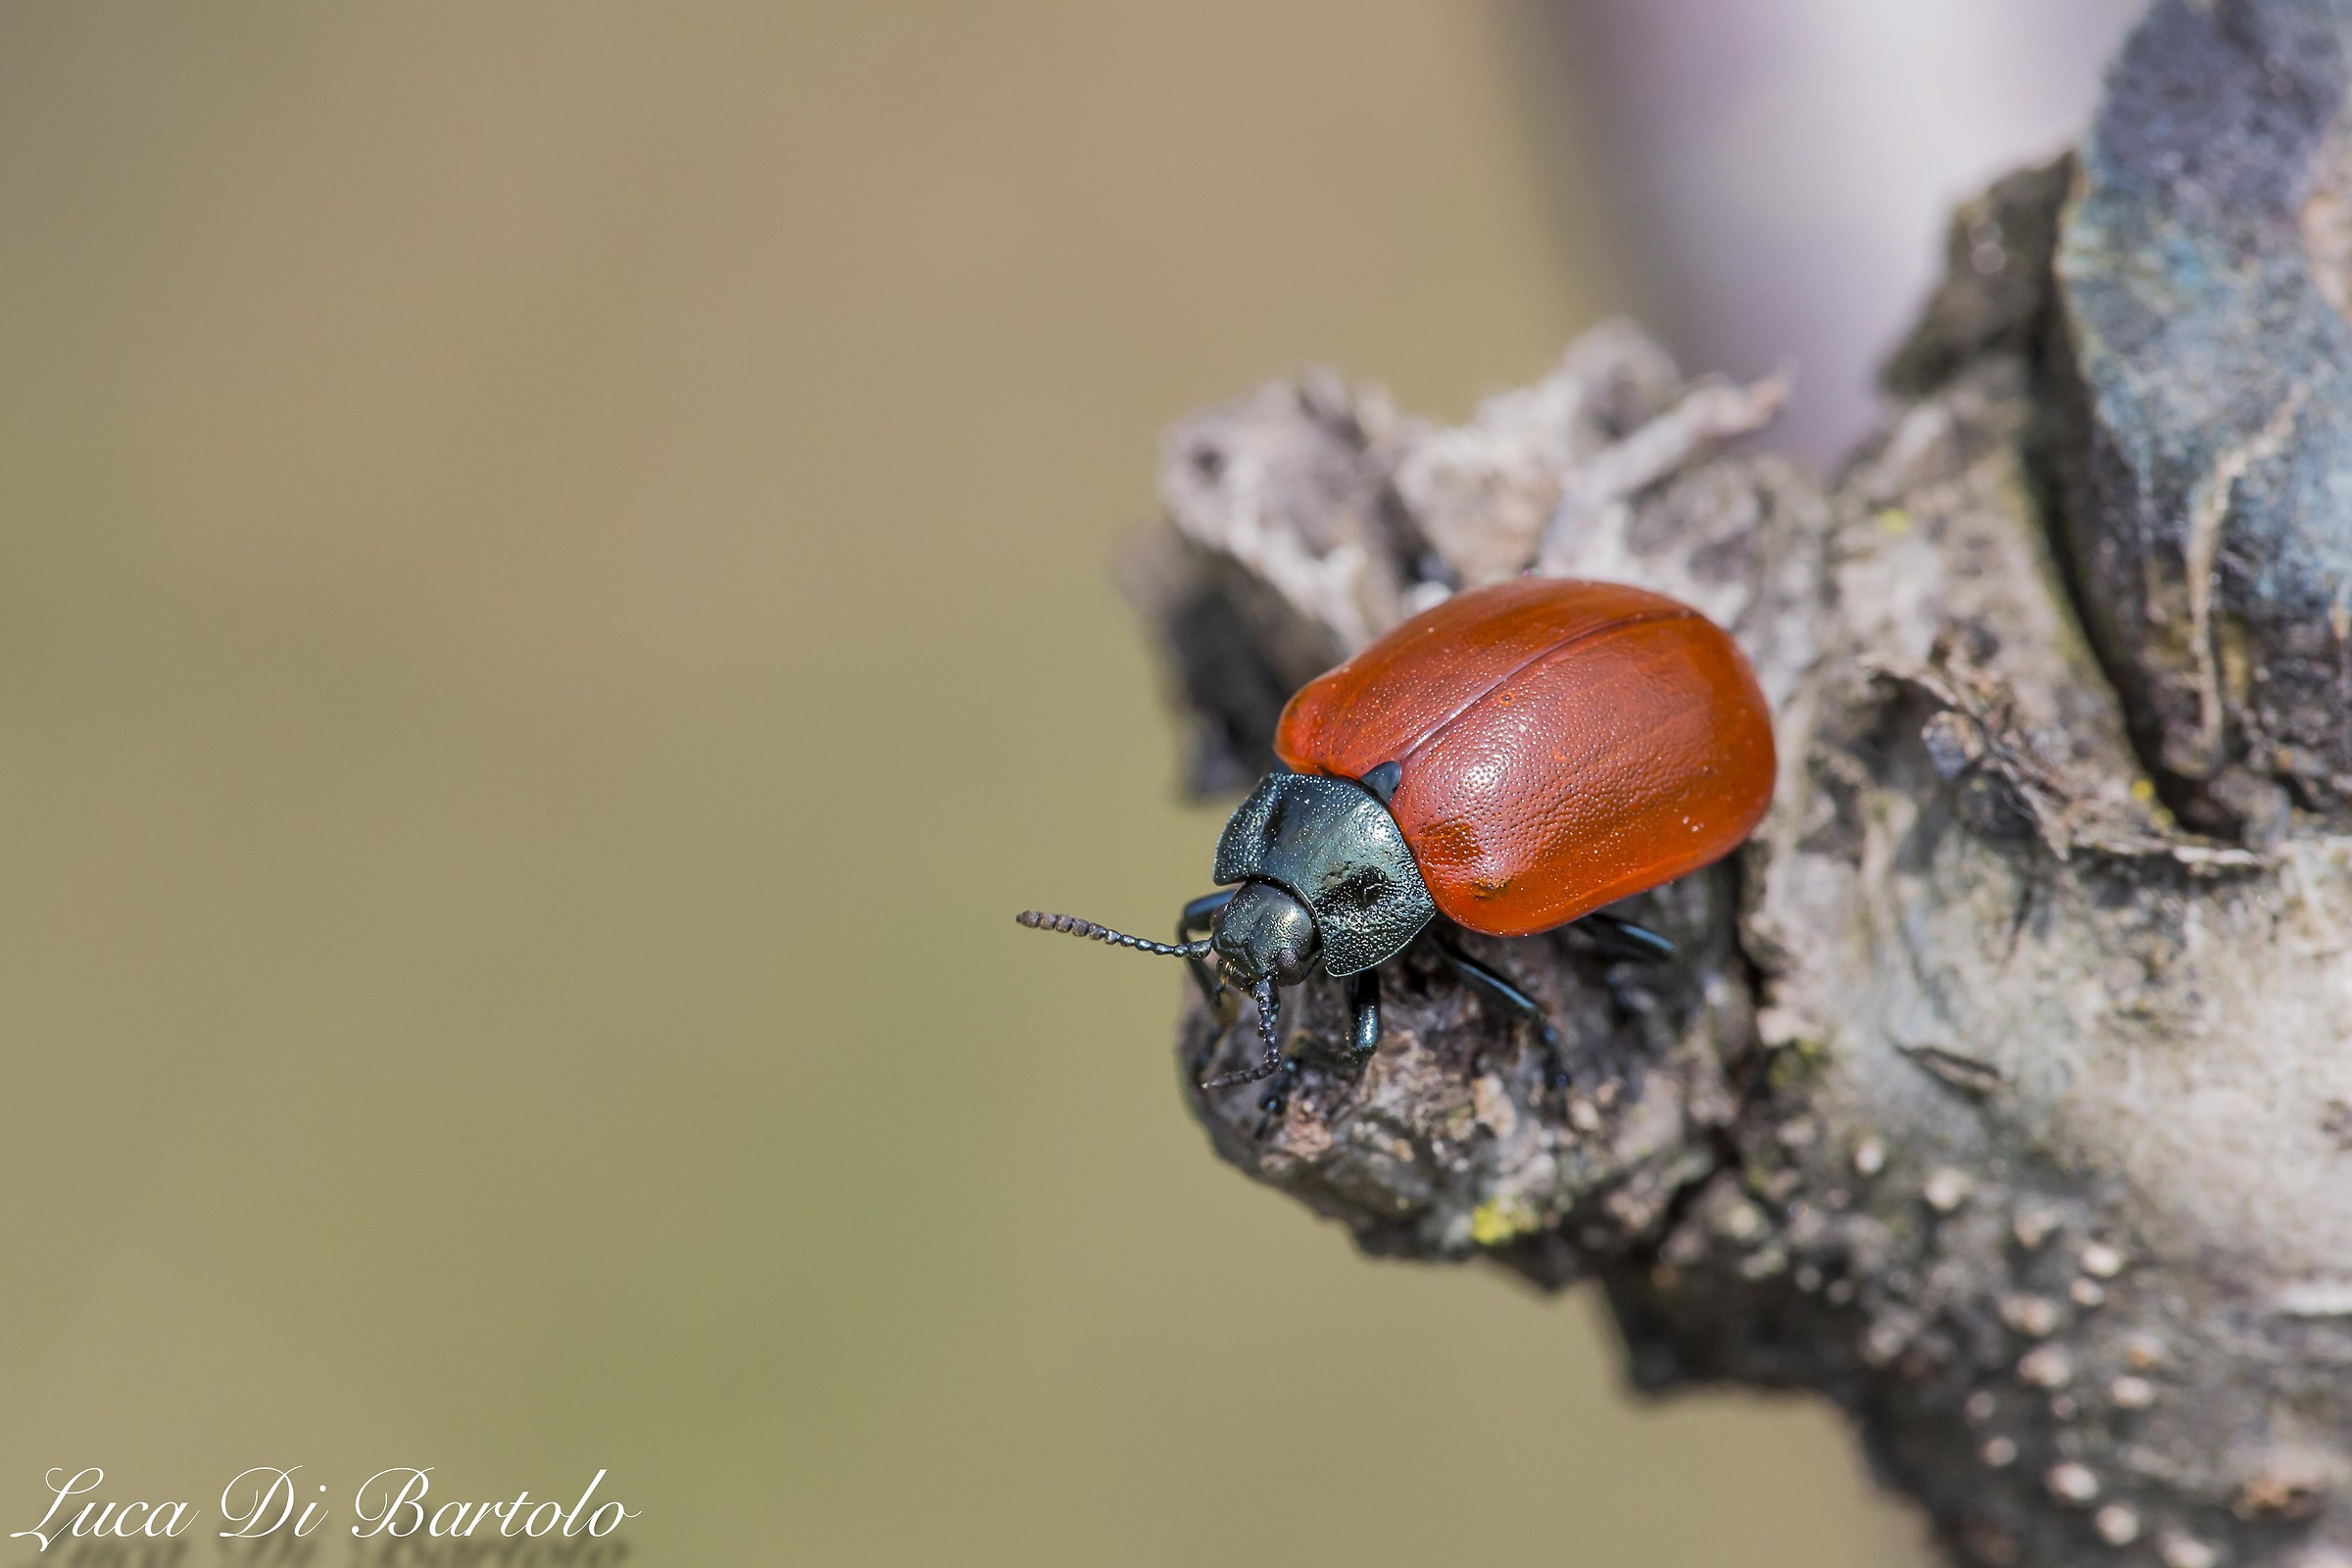 The Poplar beetle...